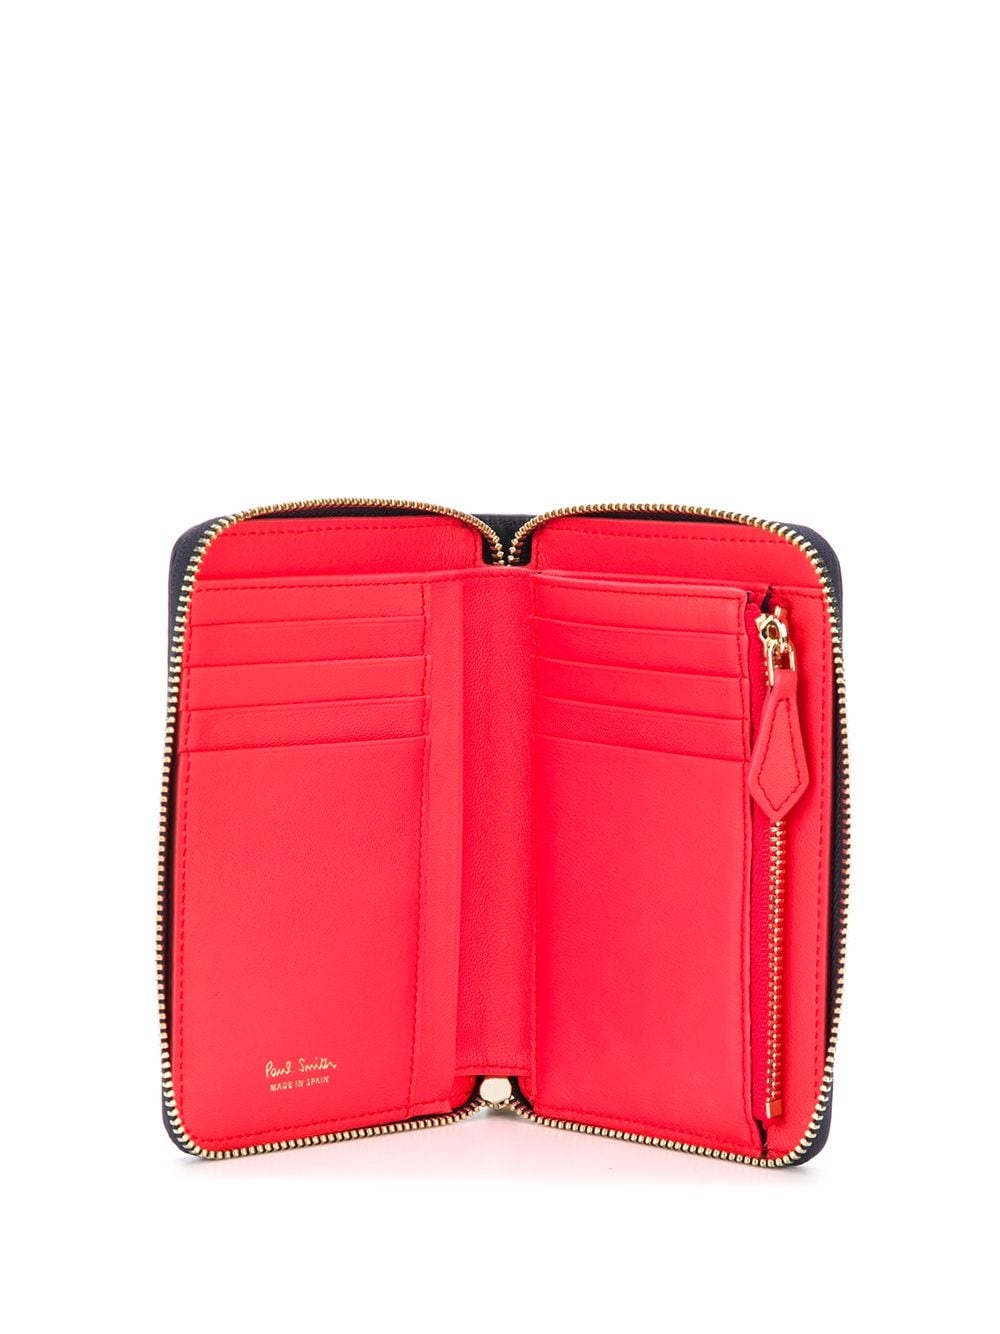 rainbow stripe leather wallet - 4